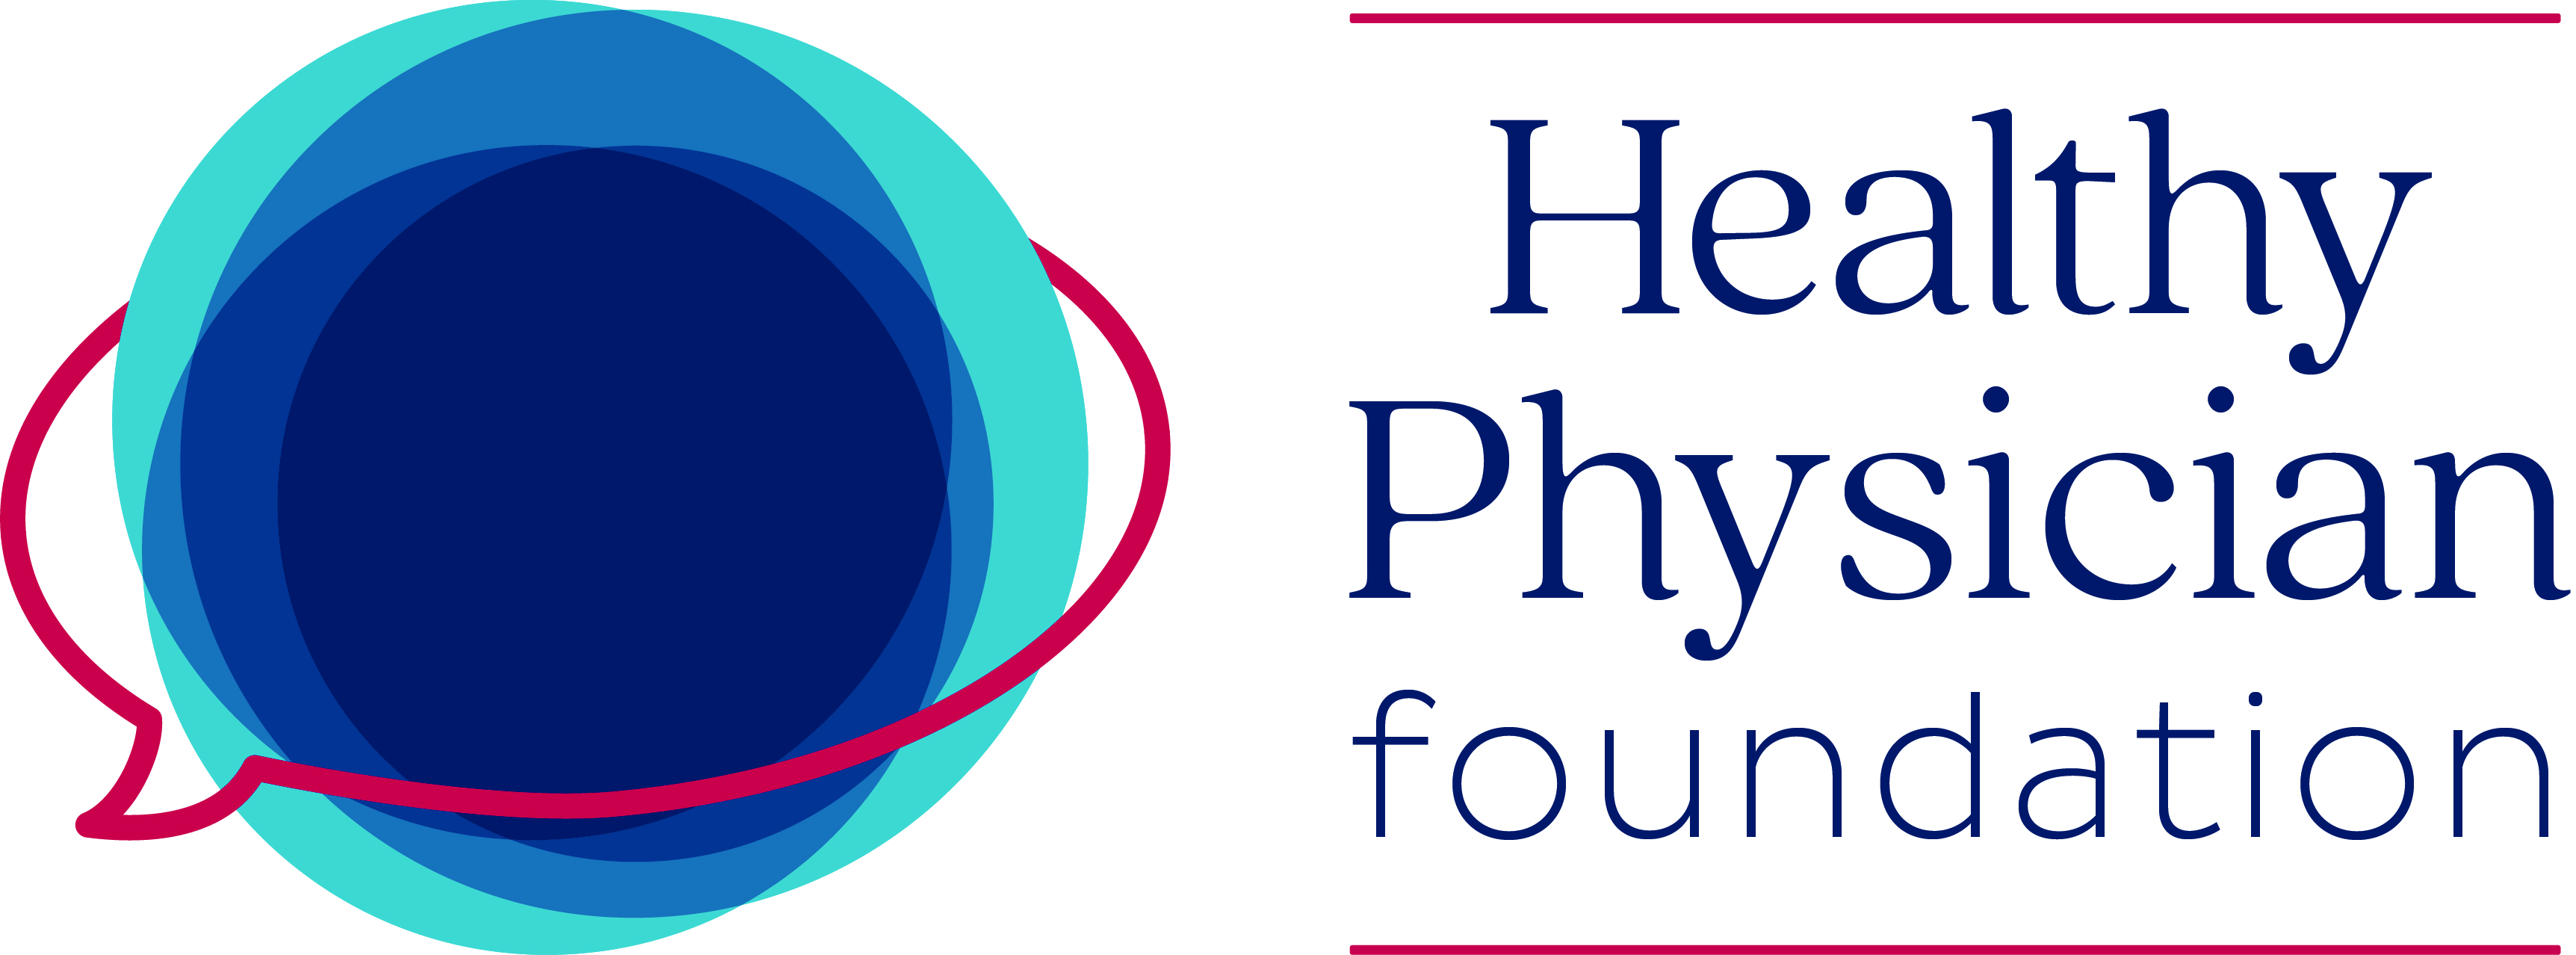 Healthy Physician Foundation logo